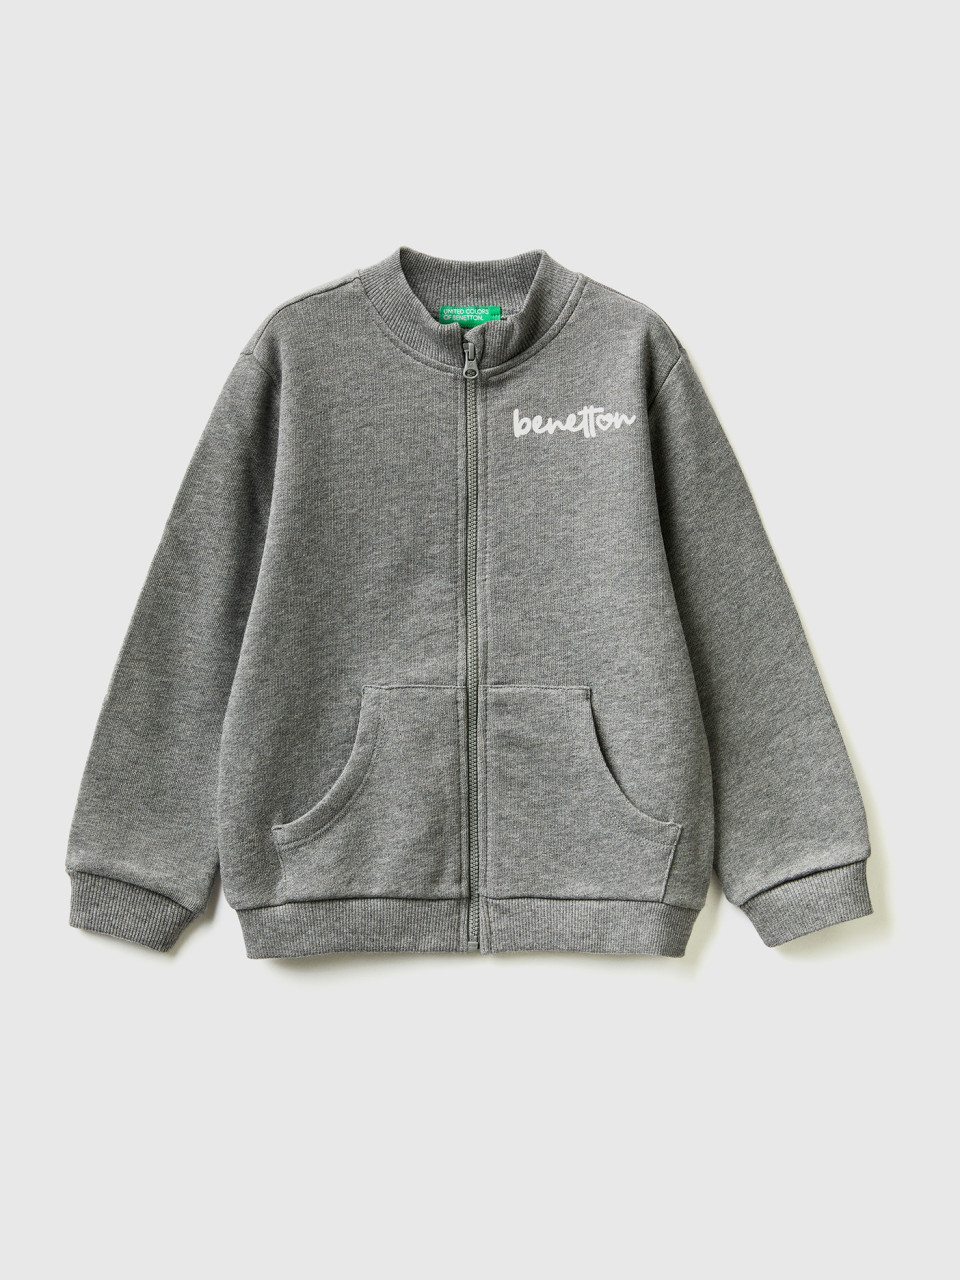 Benetton, Sweatshirt With Zip In Organic Cotton, Dark Gray, Kids